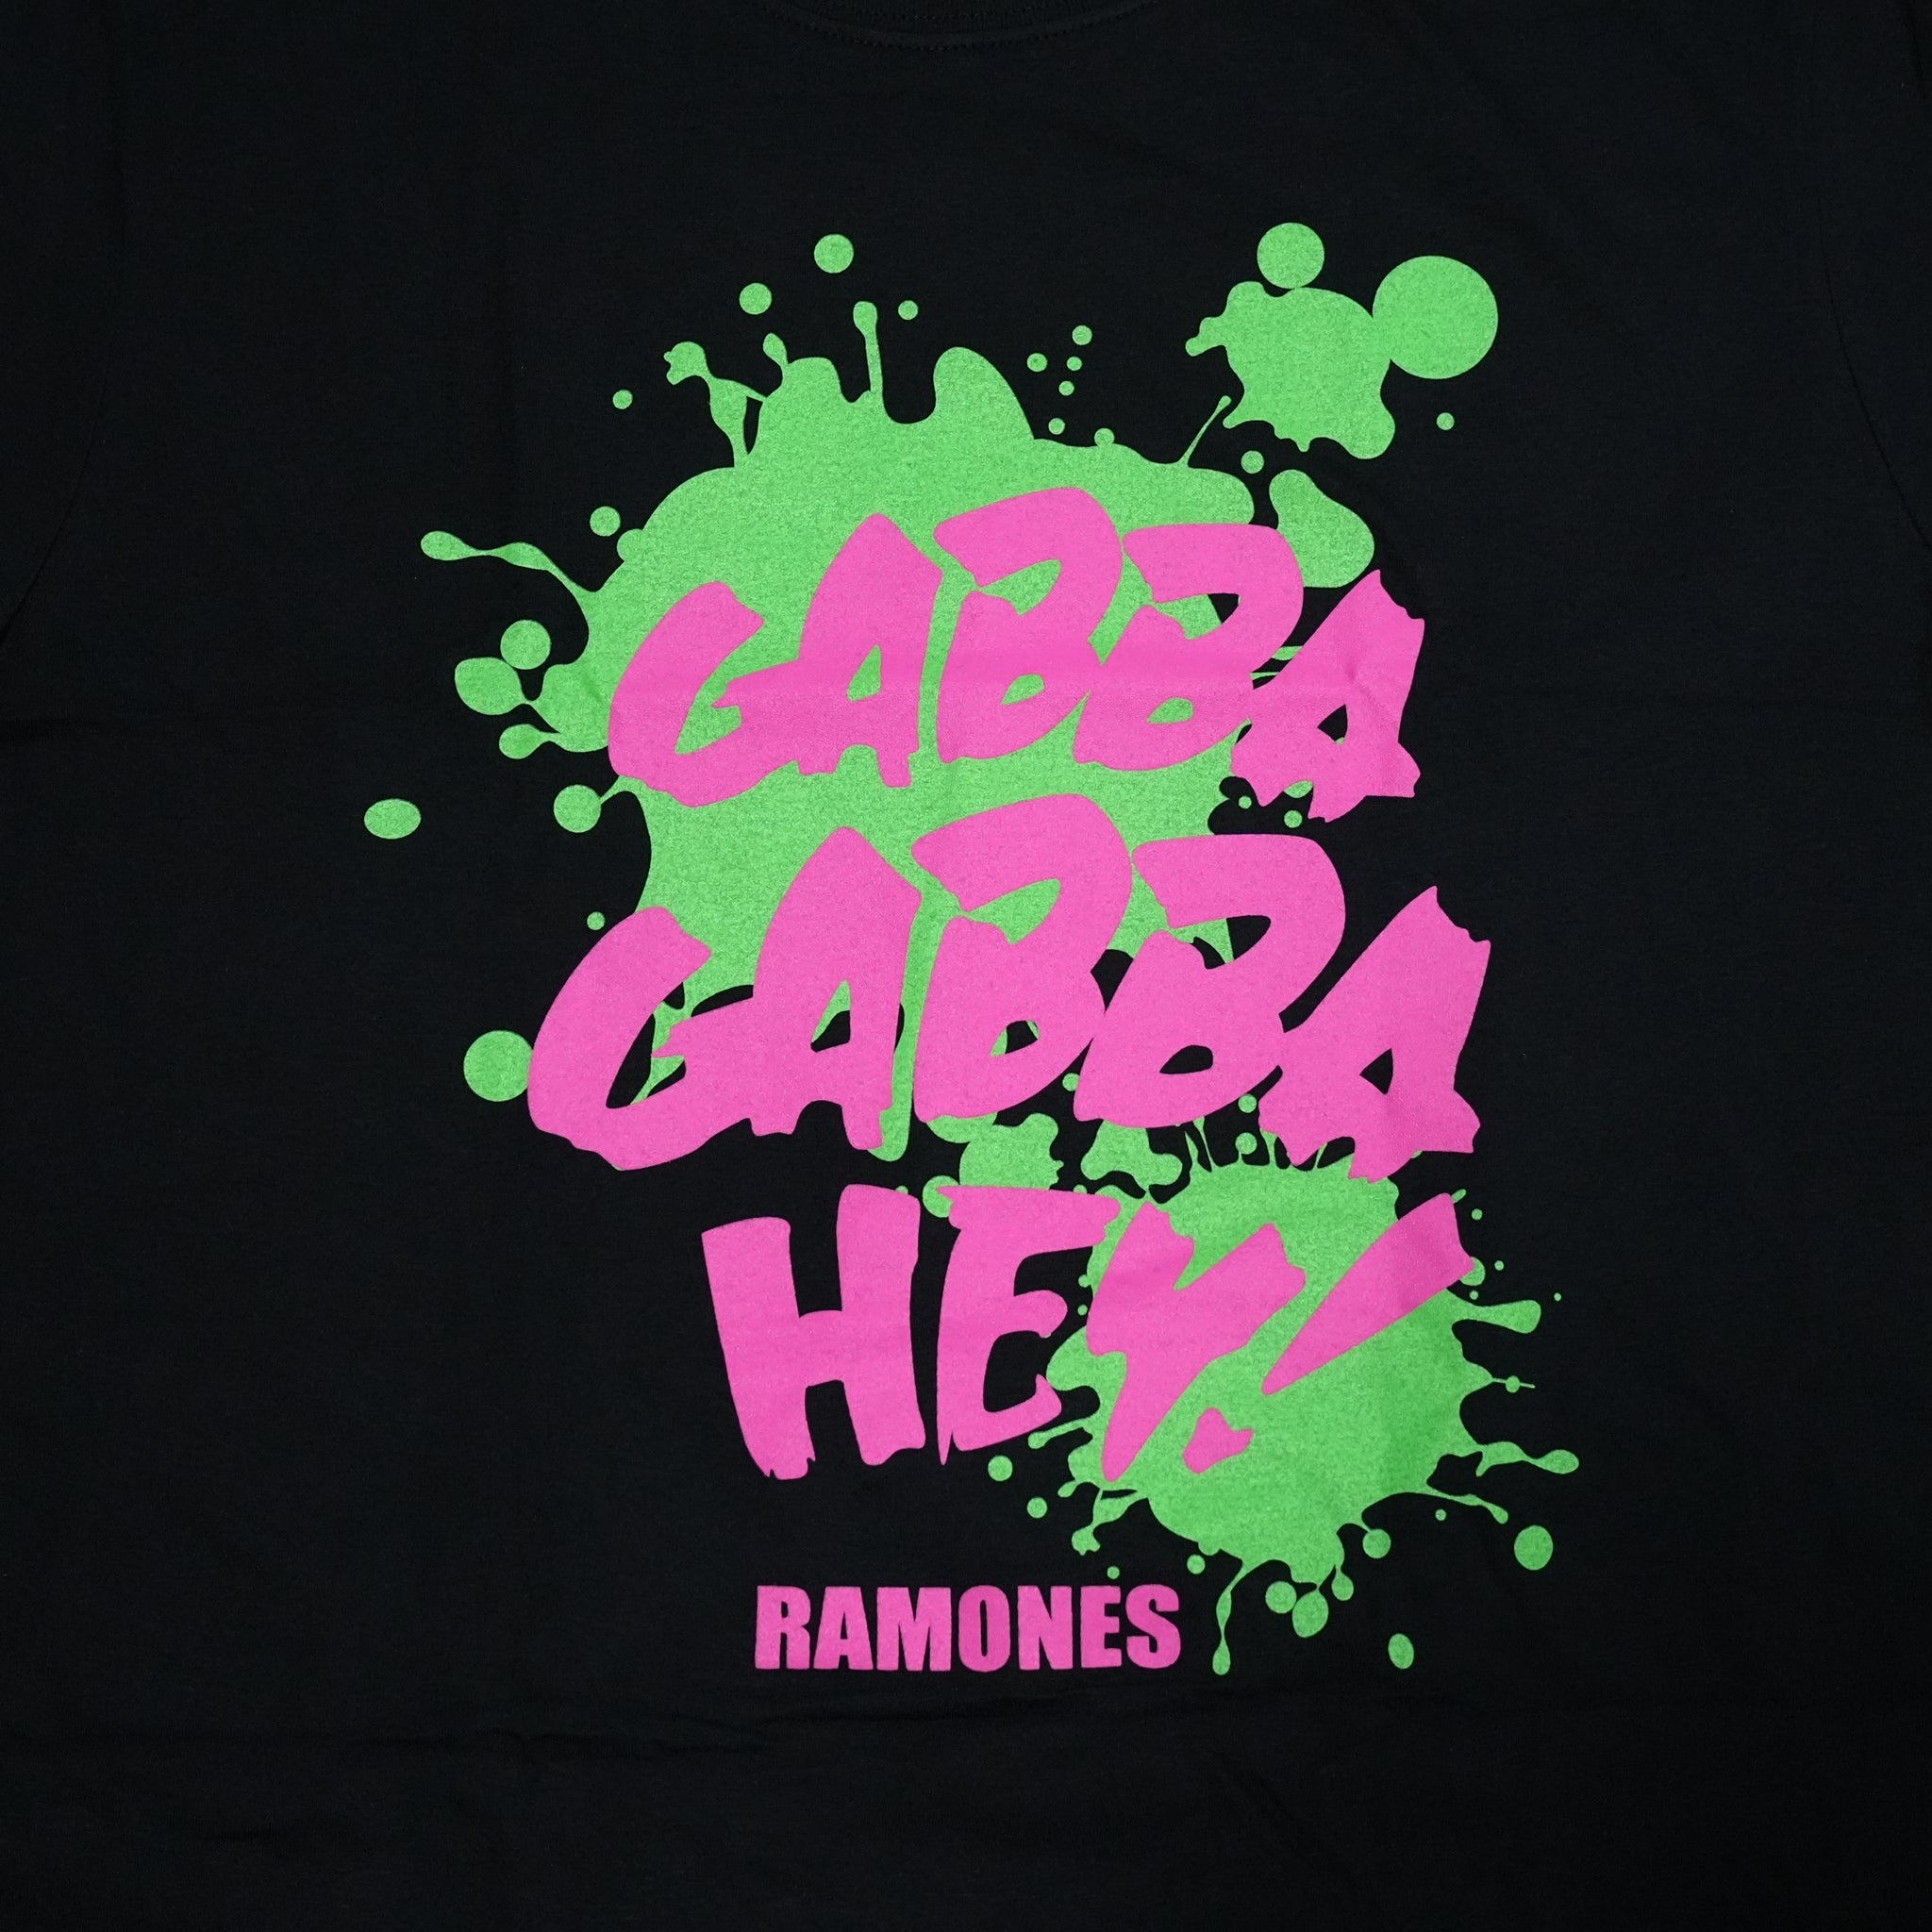 Name:Ramones_Gabba Gabba Hey_Unisex_Black【ROCK OFF】【ネコポス選択可能】